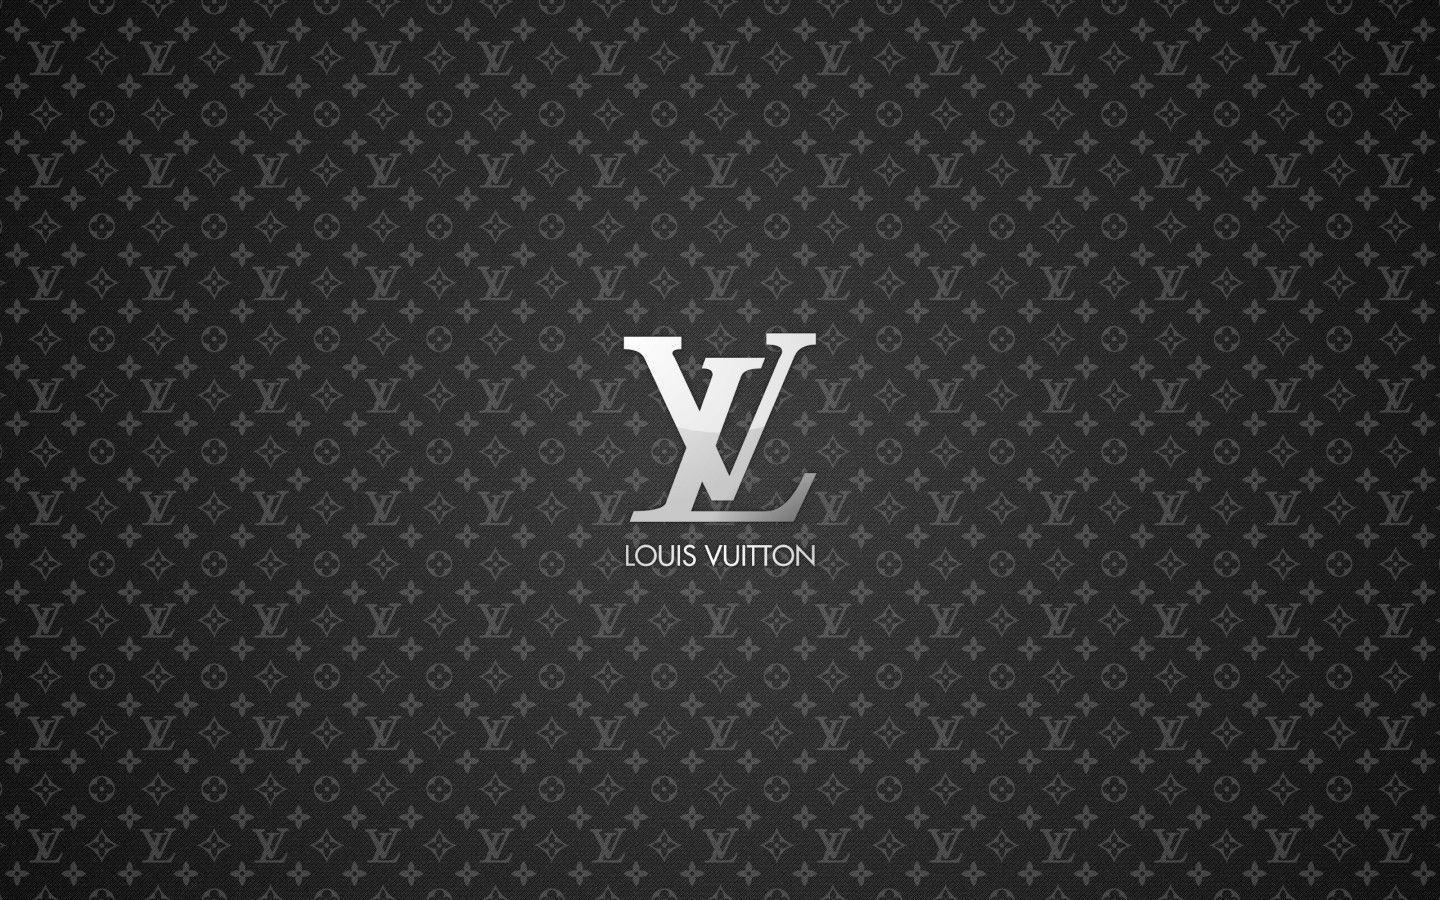 Louis Vuitton Mac Wallpaper Download. Free Mac Wallpaper Download